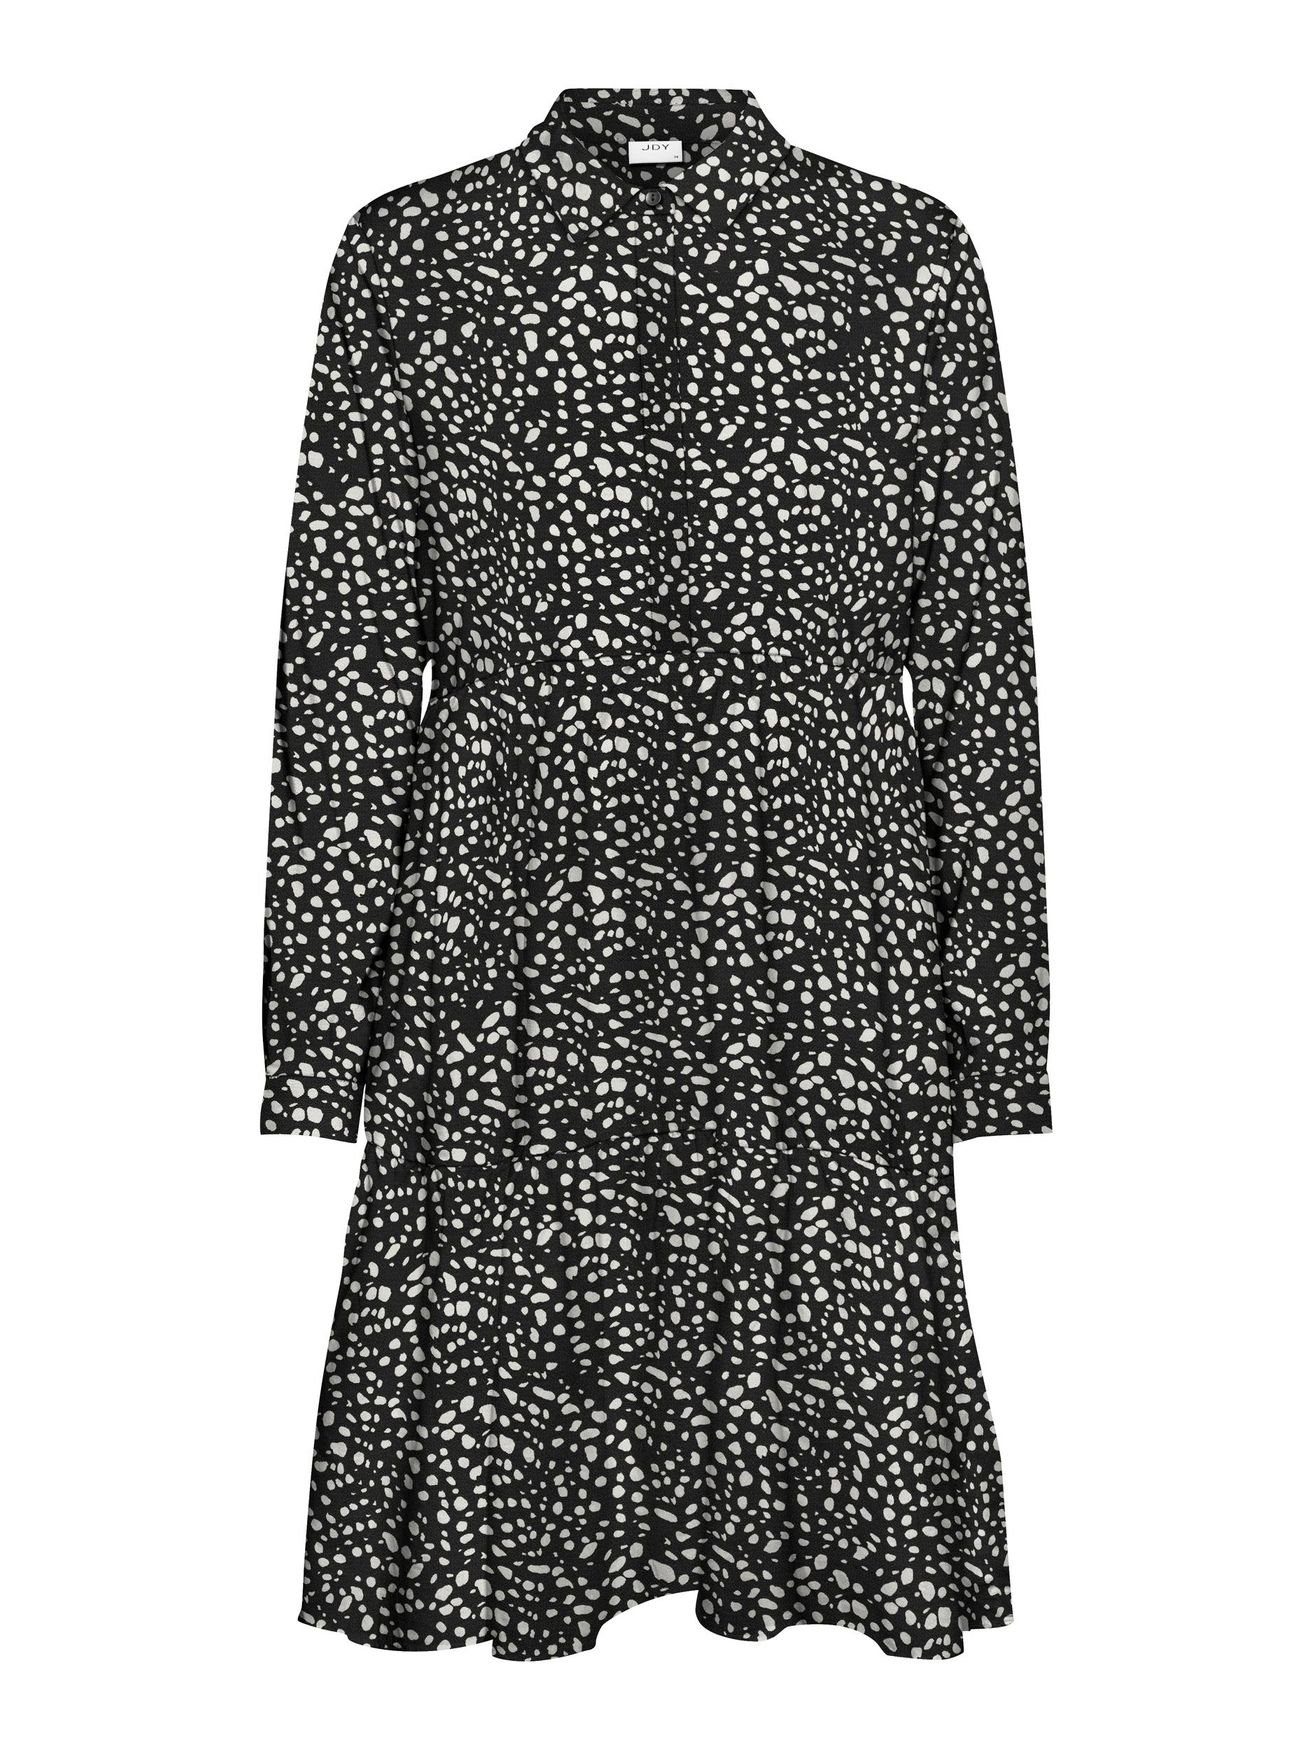 JACQUELINE de YONG Shirtkleid Kurzes Gemusterte (lang) 4536 Tunika Langarm Kleid in JDYPIPER Schwarz-6 Bluse